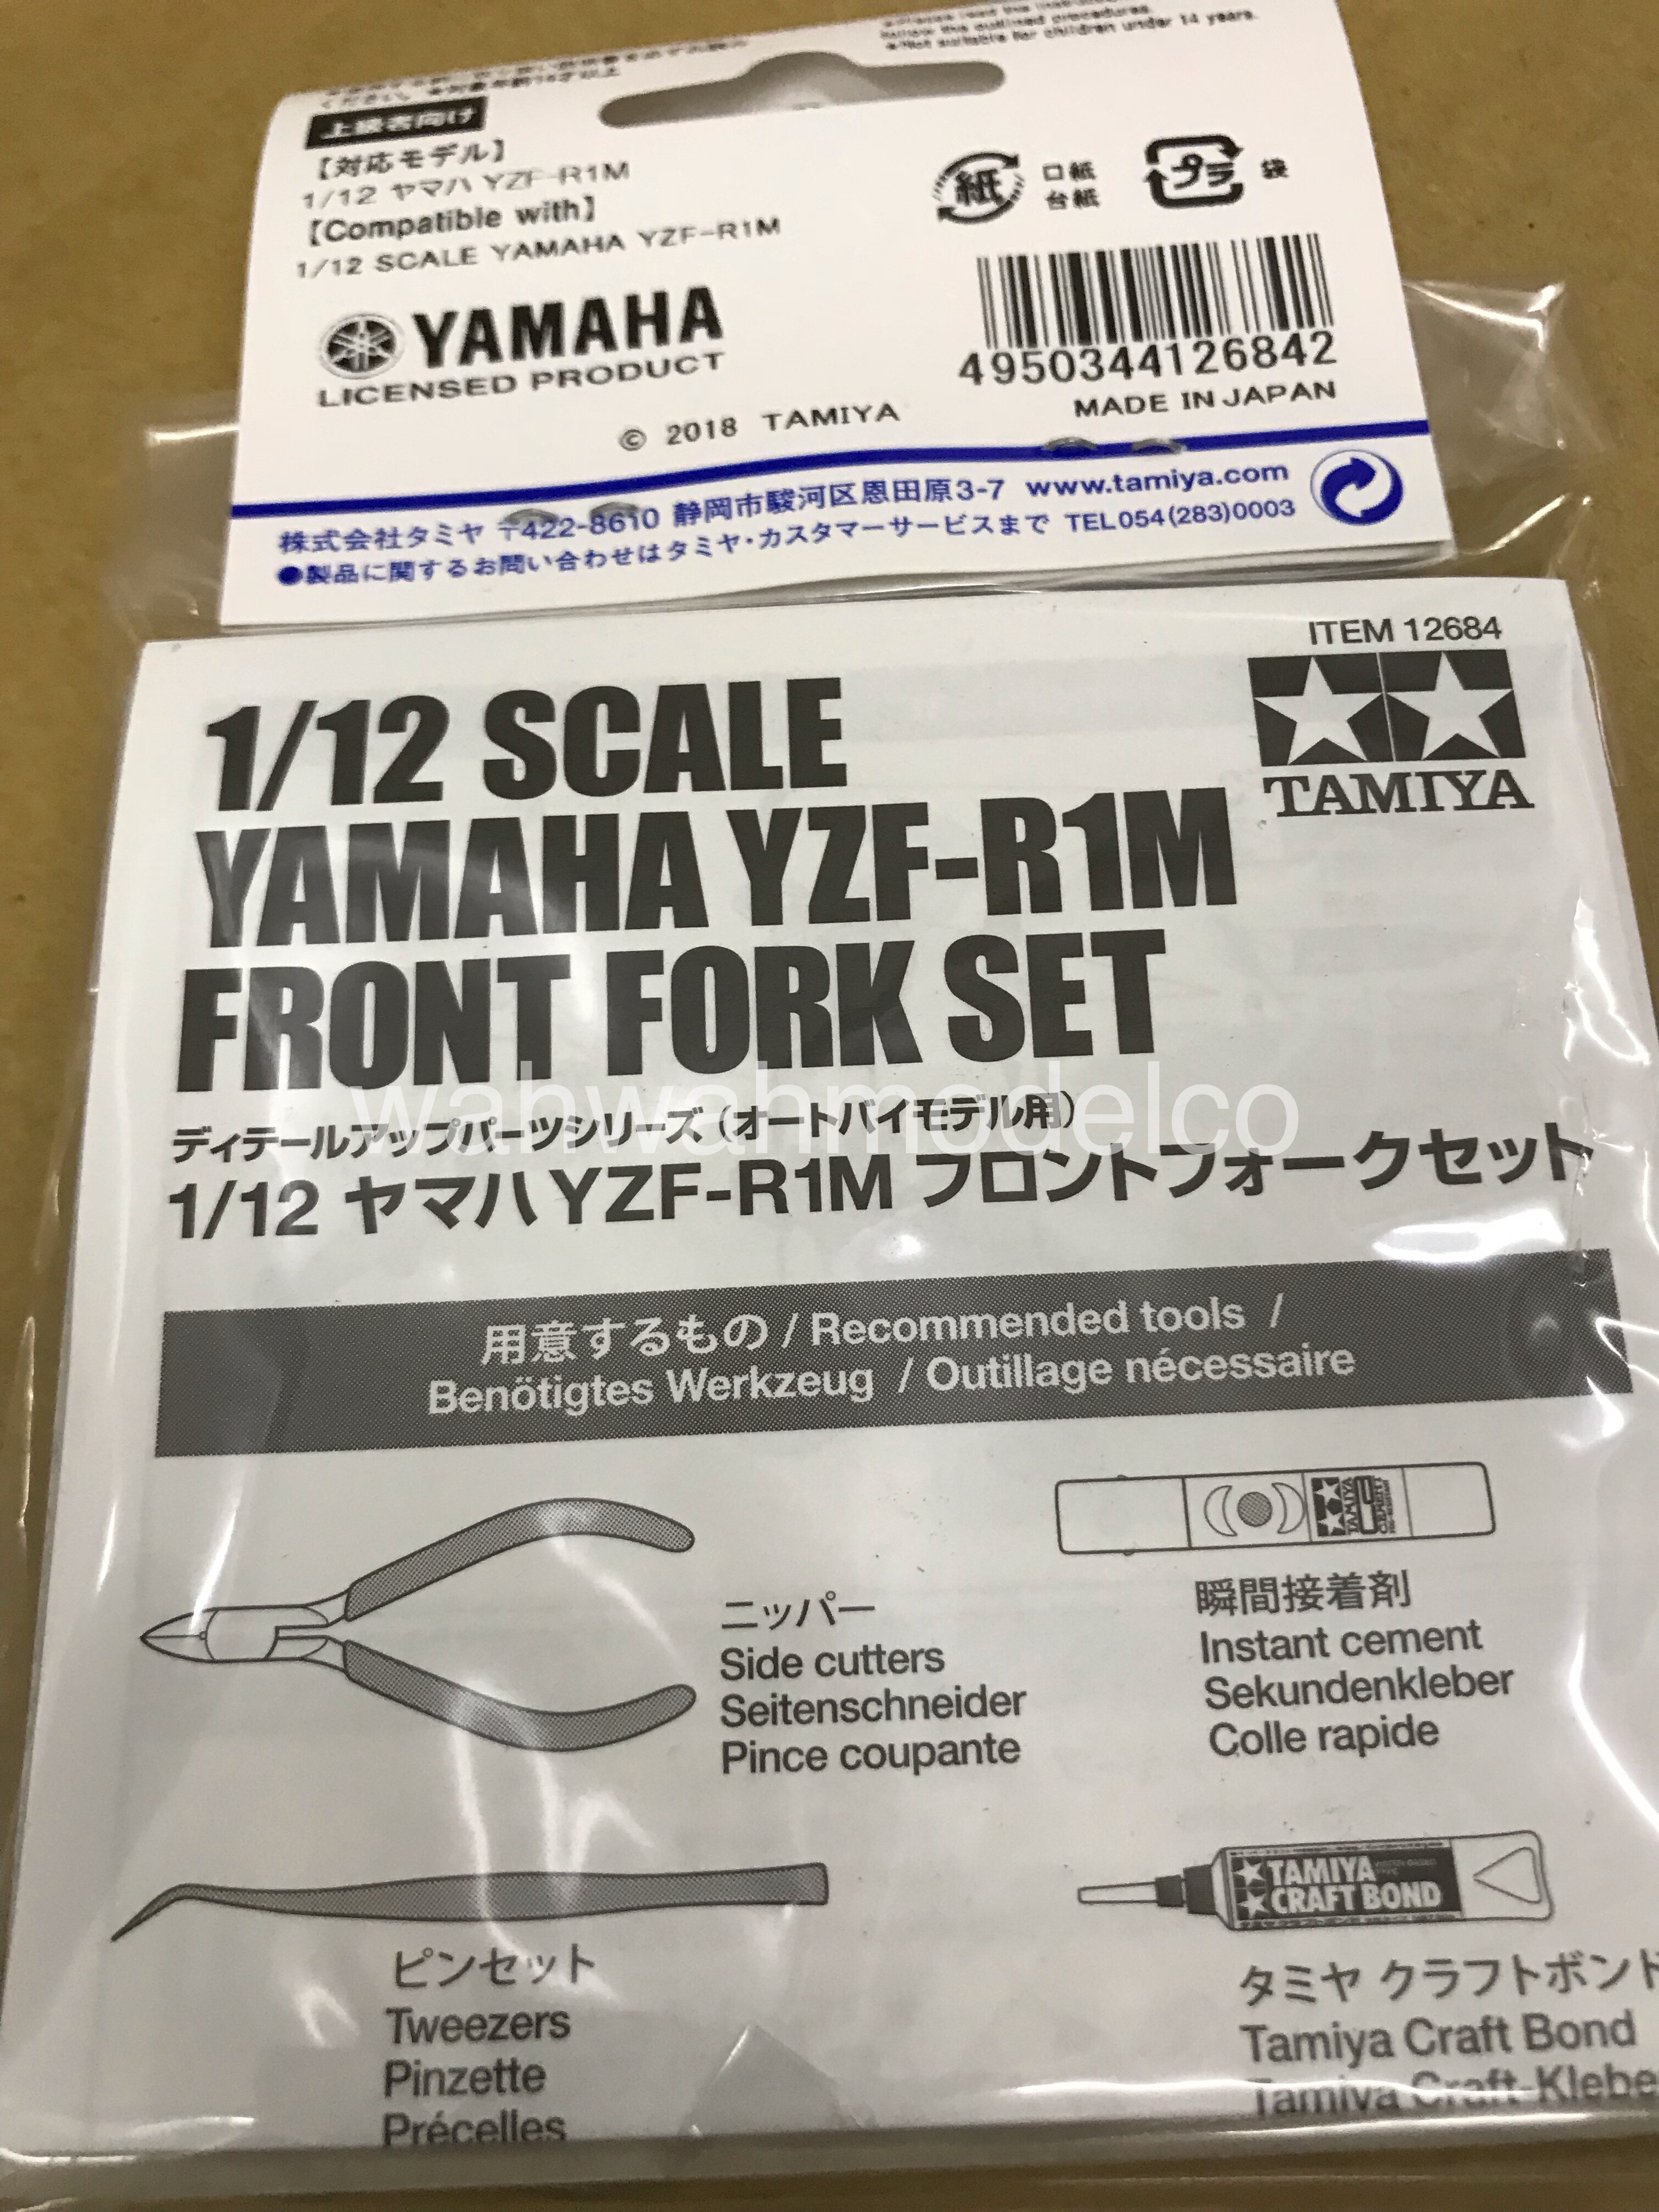 Tamiya 12684 Yamaha YZF-R1M Front Fork Set 1/12 